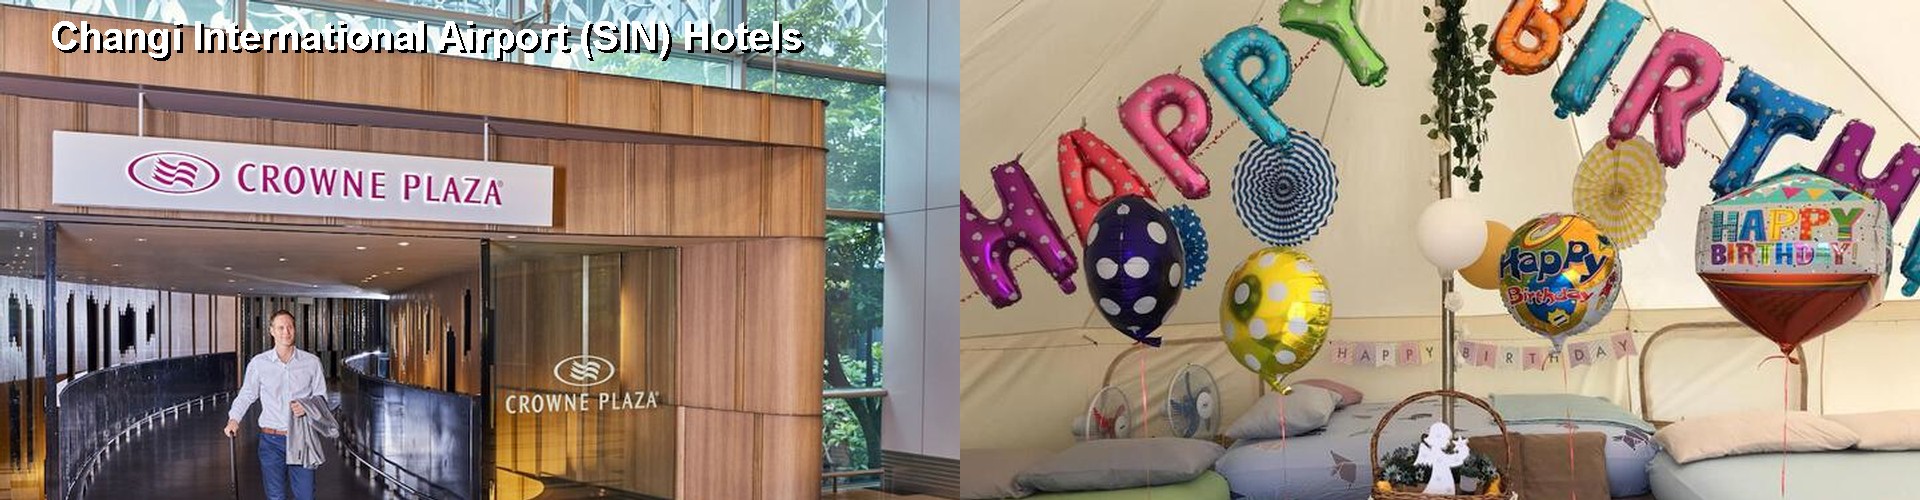 5 Best Hotels near Changi International Airport (SIN)